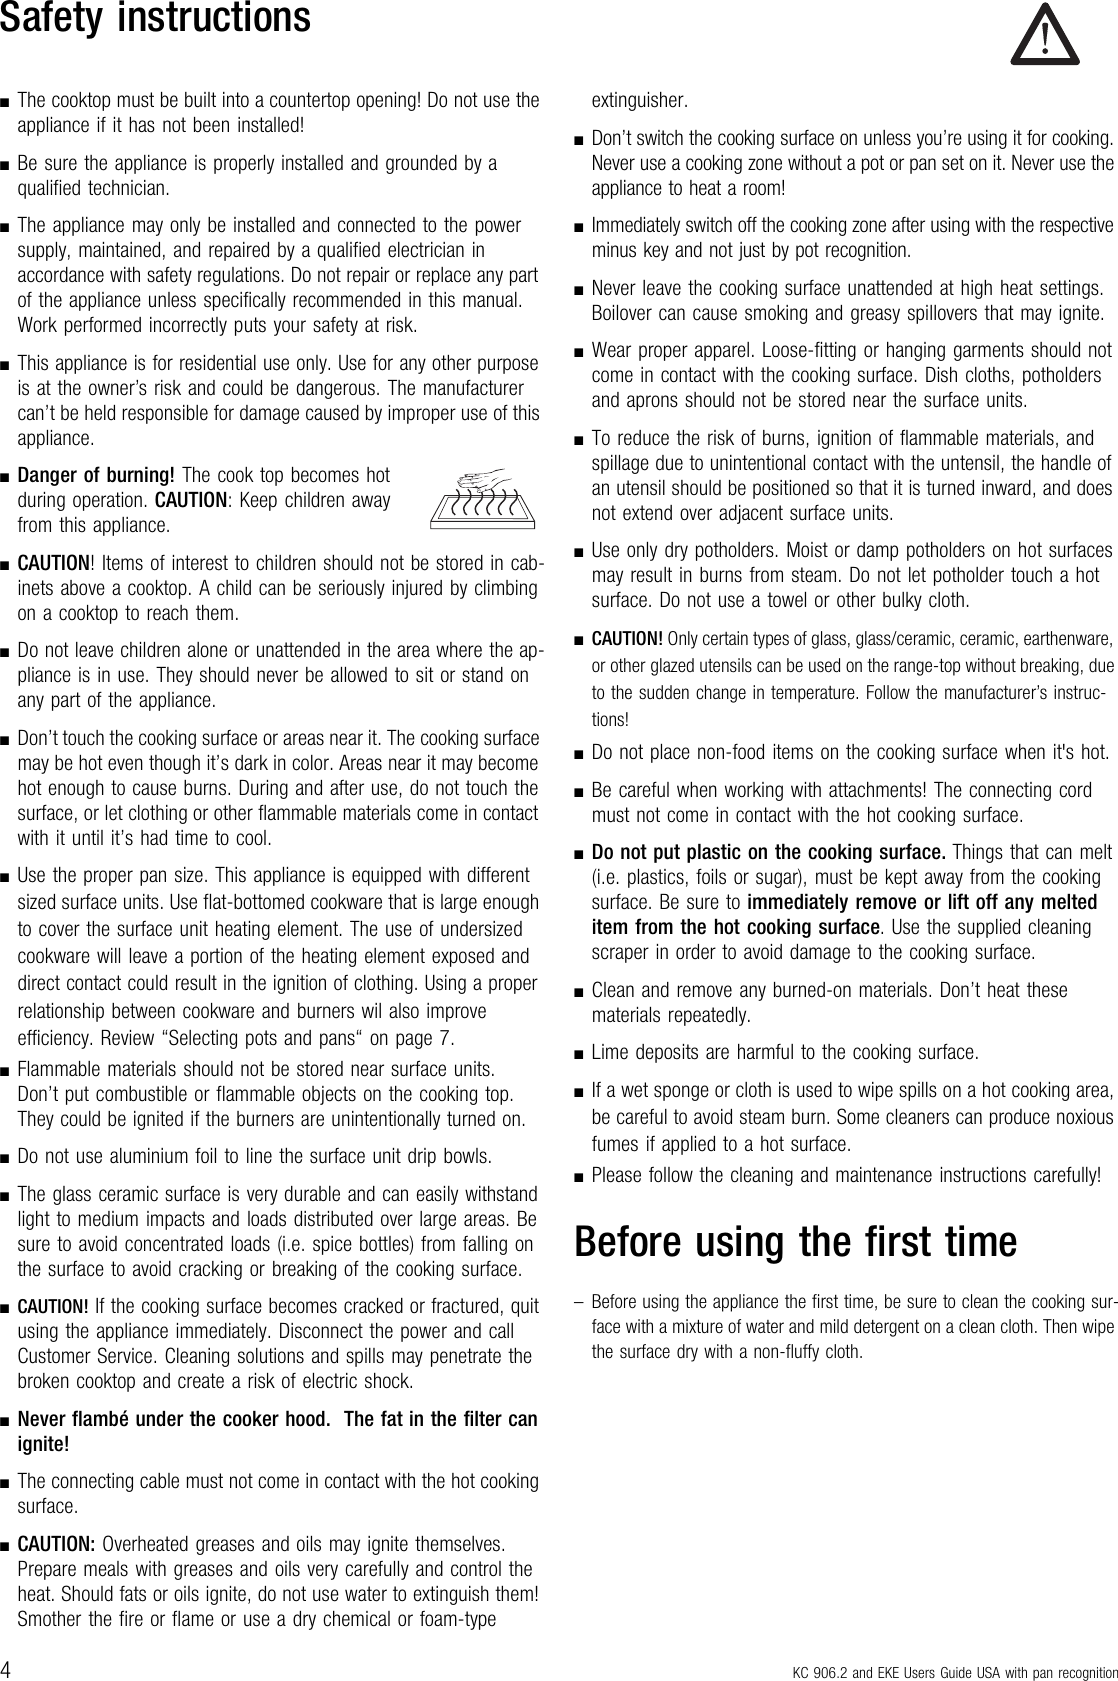 Page 4 of 12 - Kuppersbusch-Usa Kuppersbusch-Usa-604-2-Users-Manual-  Kuppersbusch-usa-604-2-users-manual